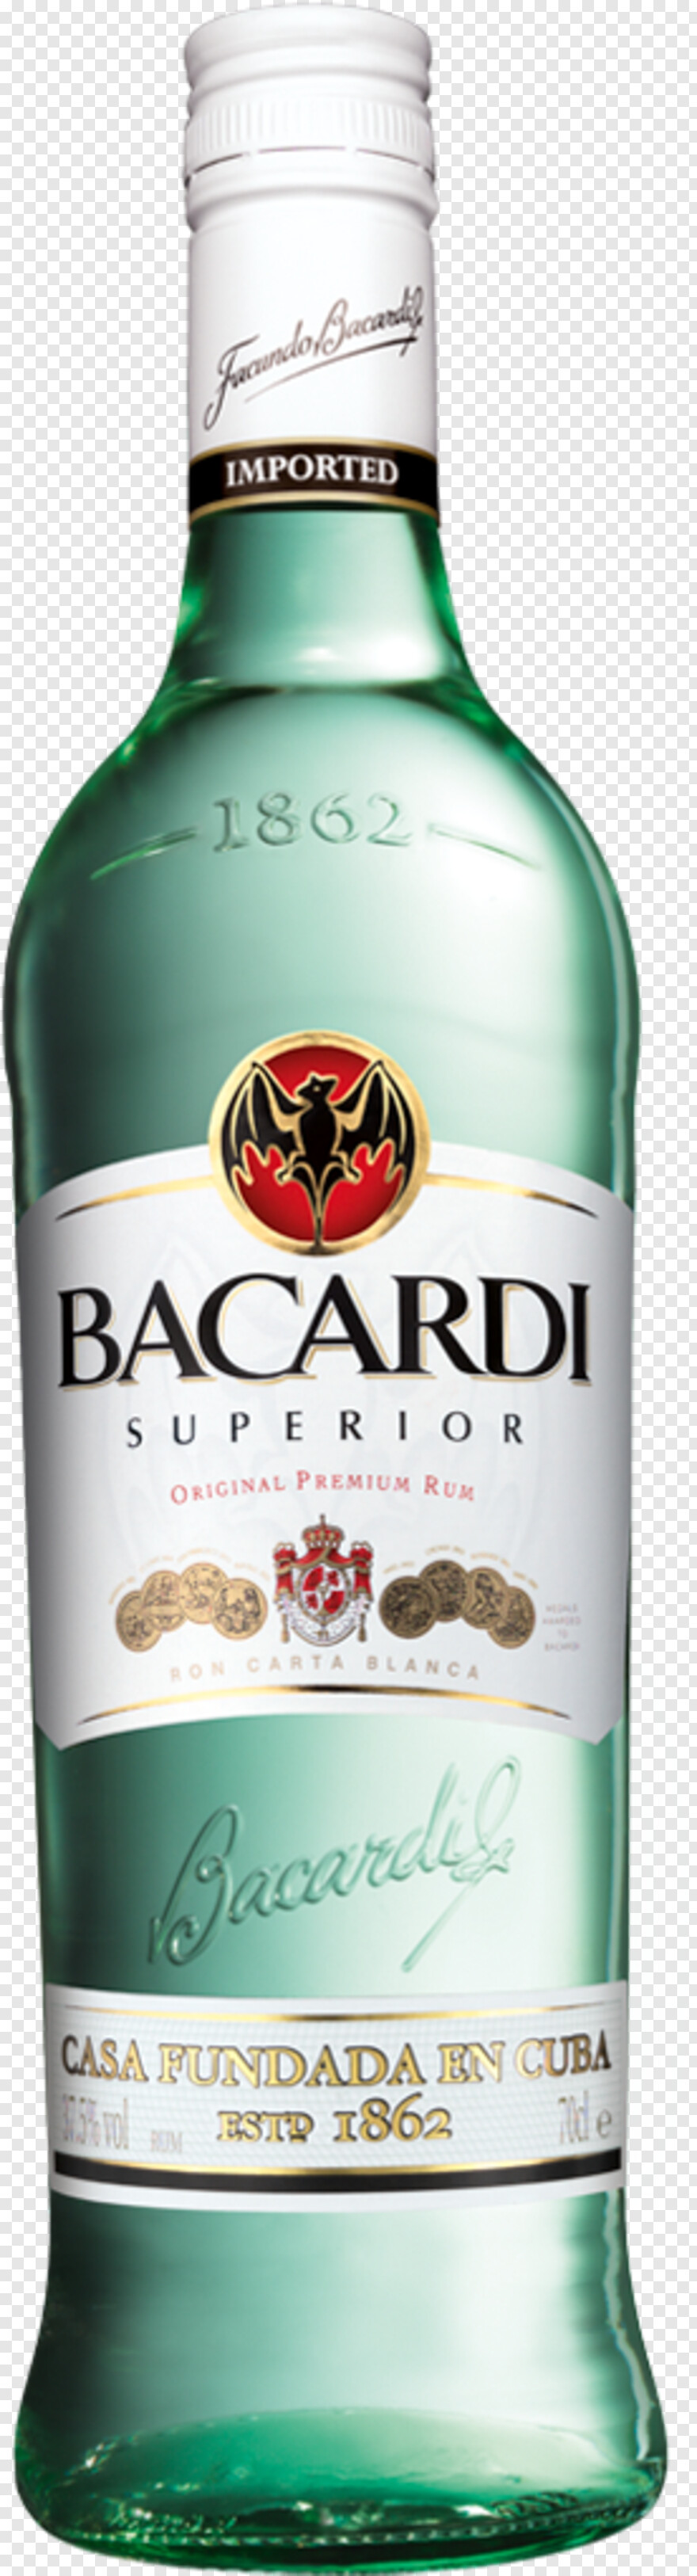 bacardi-logo # 630893